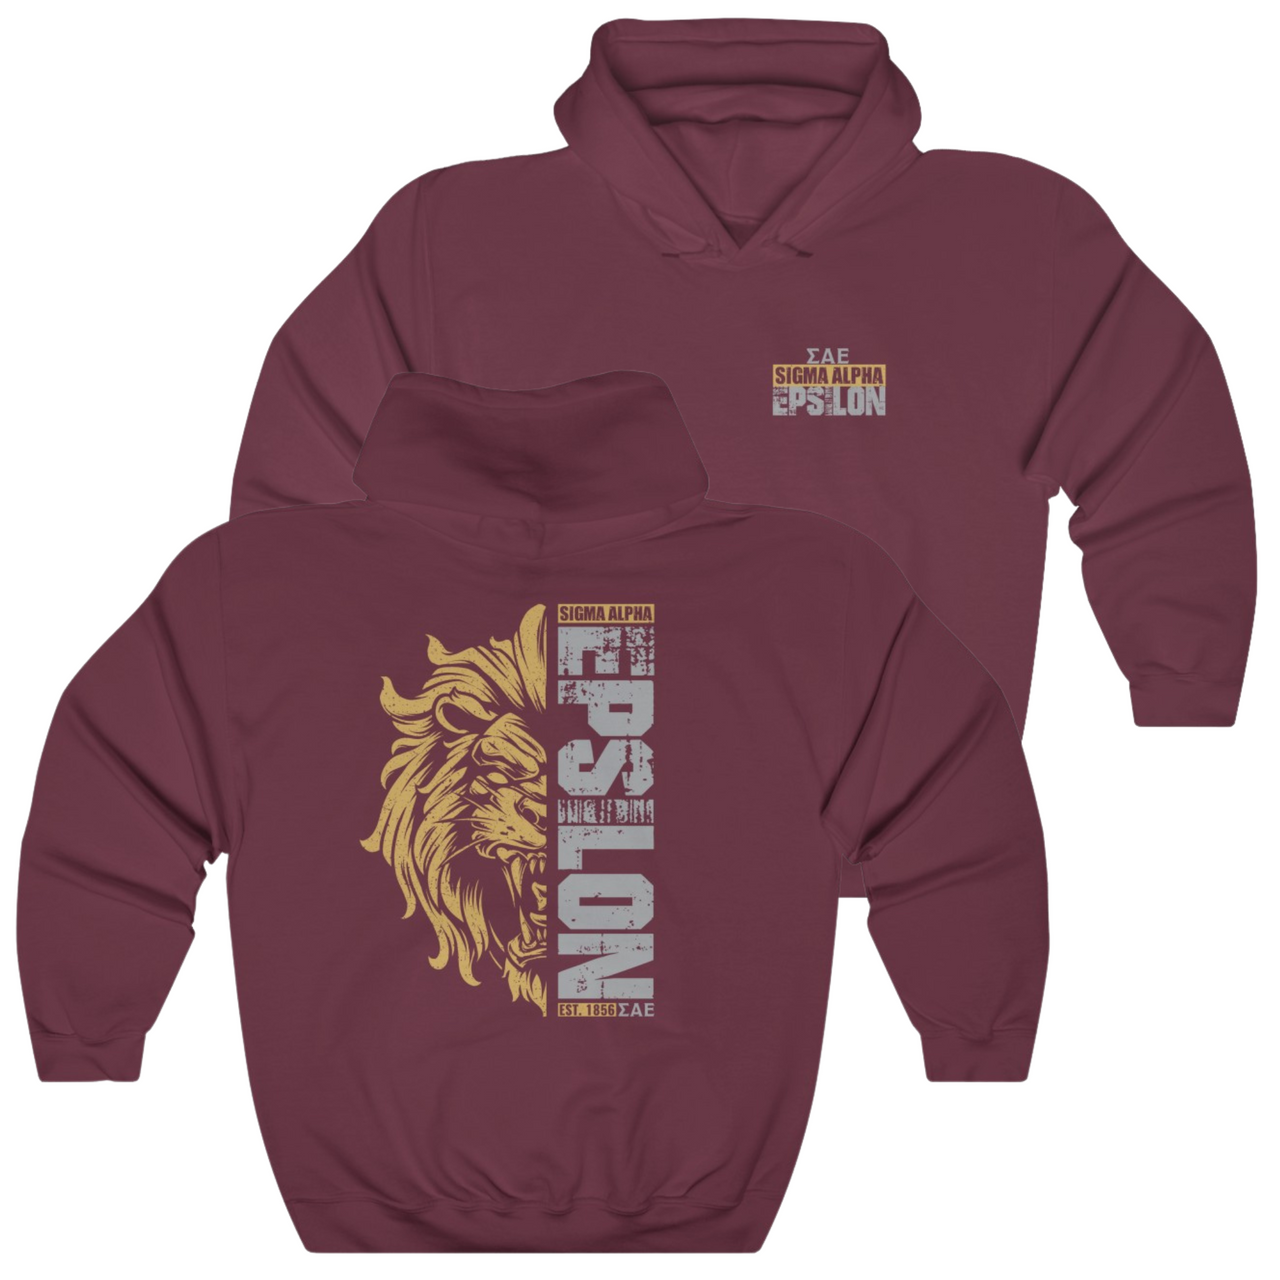 Red Sigma Alpha Epsilon Graphic Hoodie | Lion Hearted | Sigma Alpha Epsilon Clothing and Merchandise